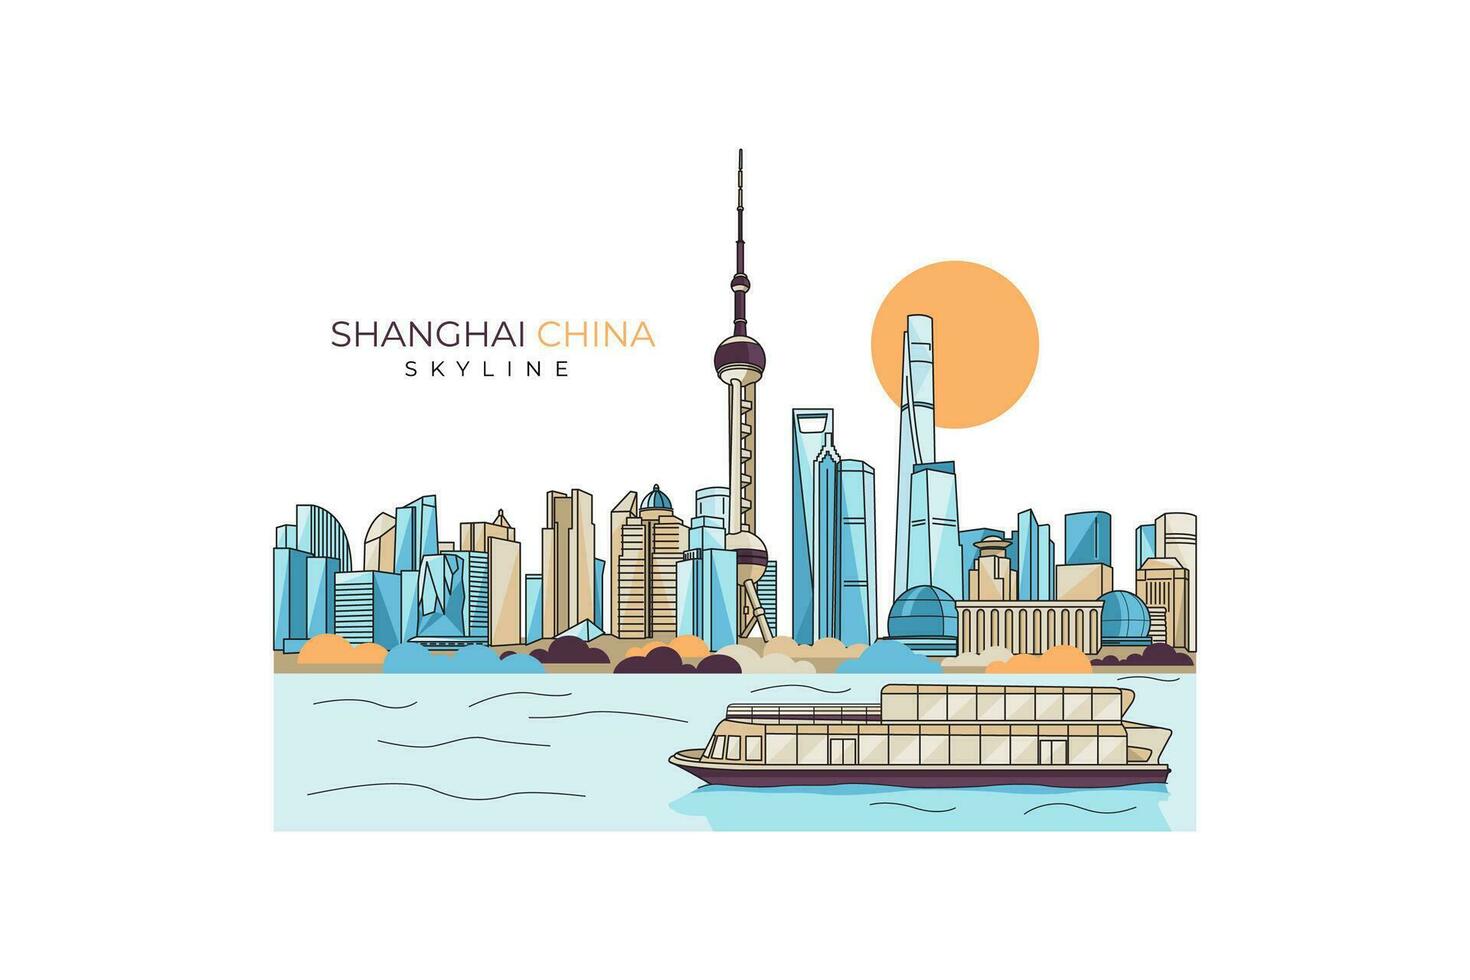 Shanghai China Skyline vector